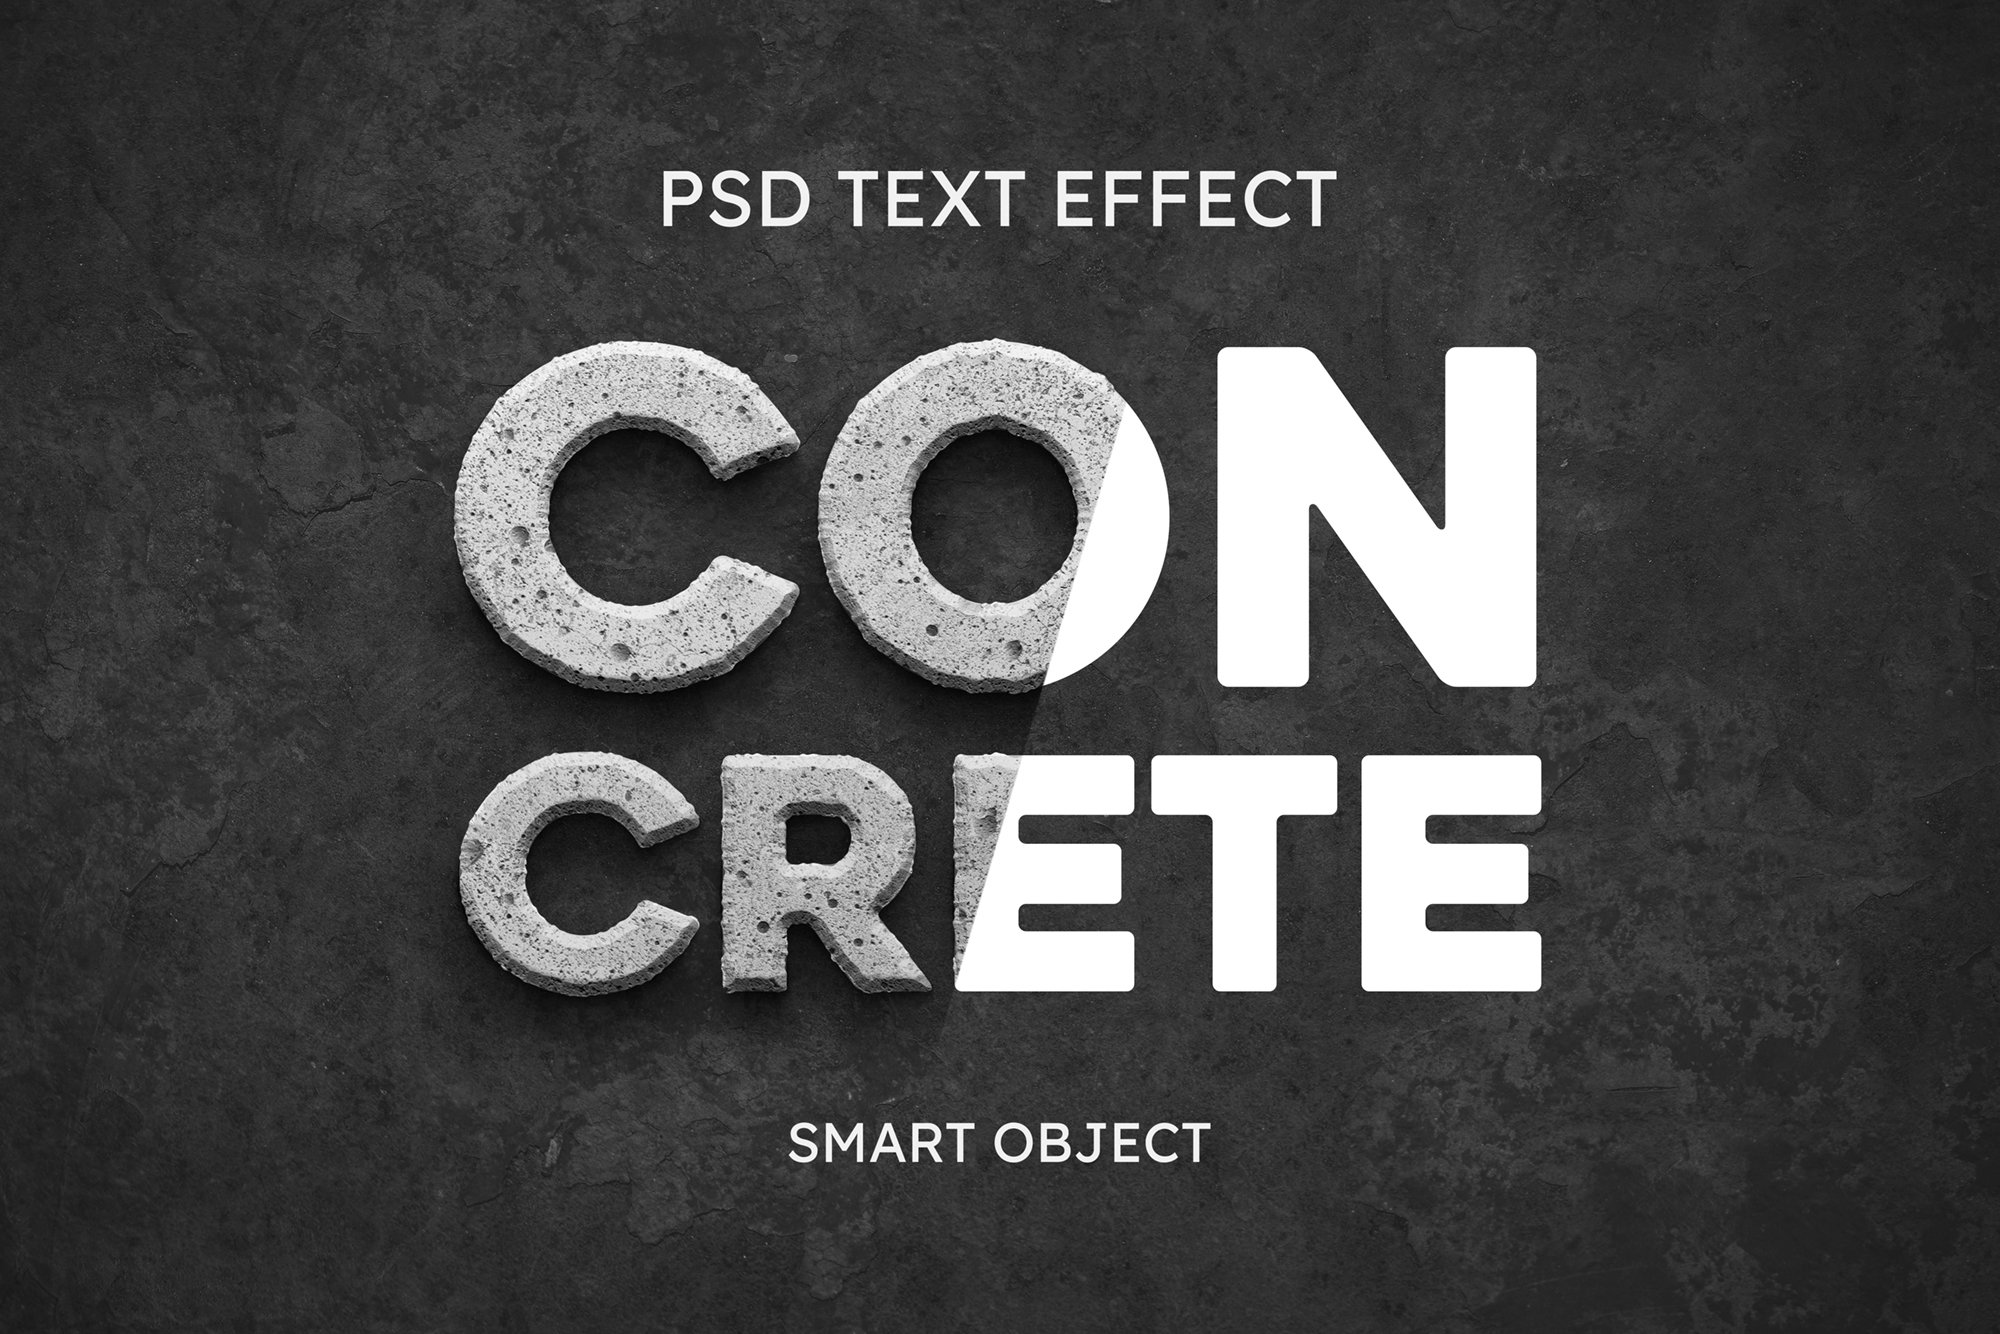 Concrete Text Effect PSDpreview image.